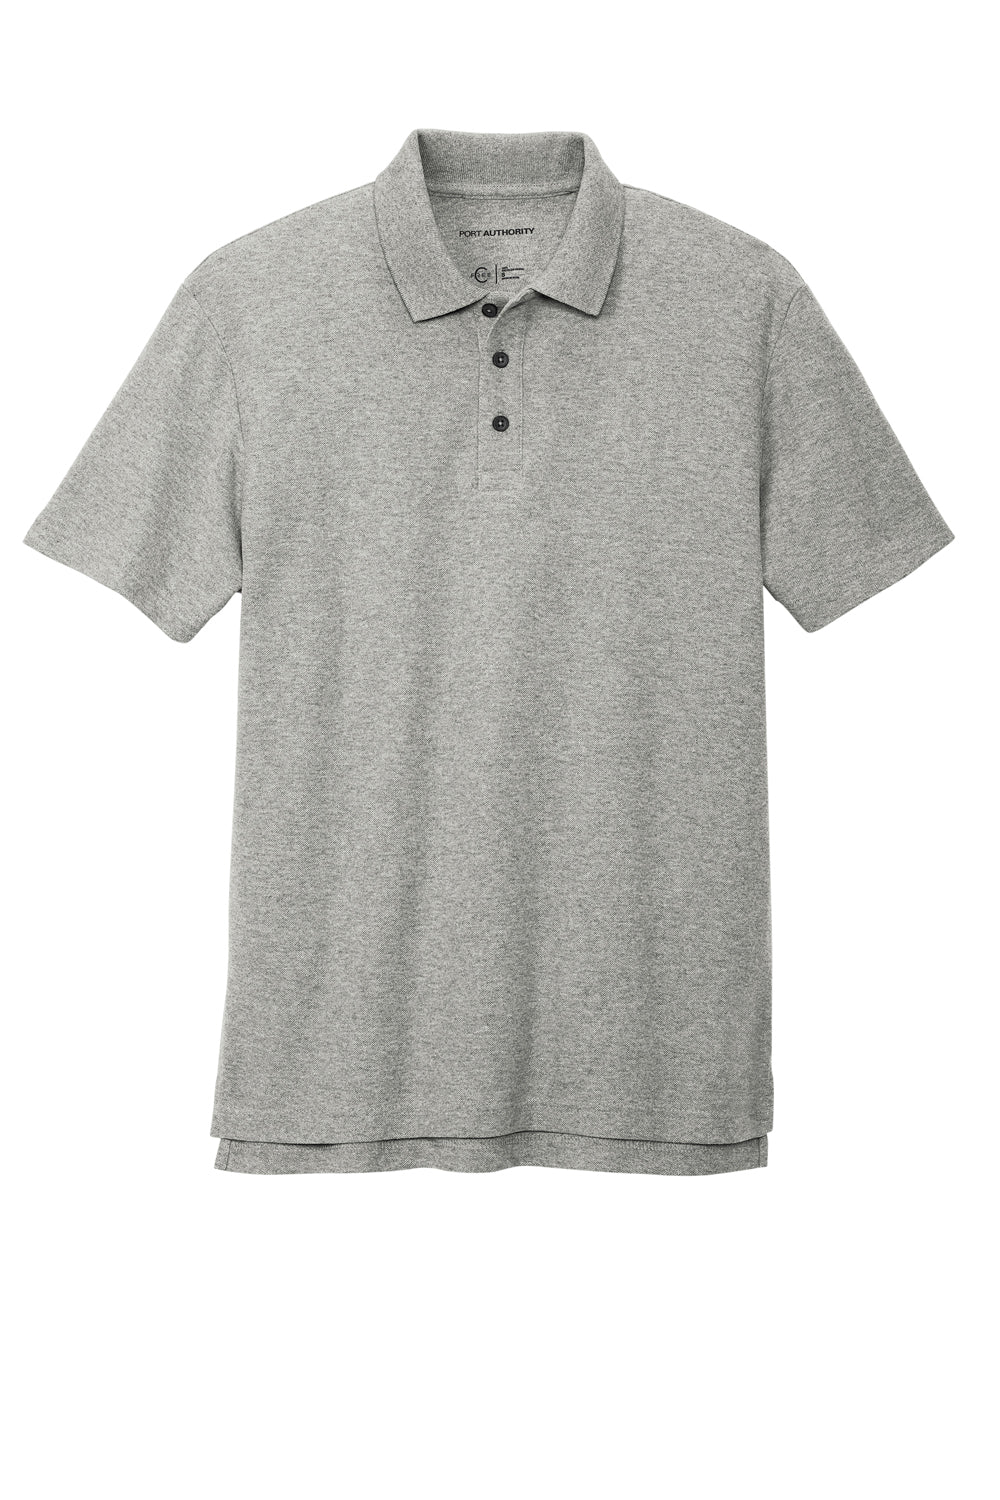 Port Authority K867 Mens C-FREE Pique Short Sleeve Polo Shirt Heather Deep Smoke Grey Flat Front